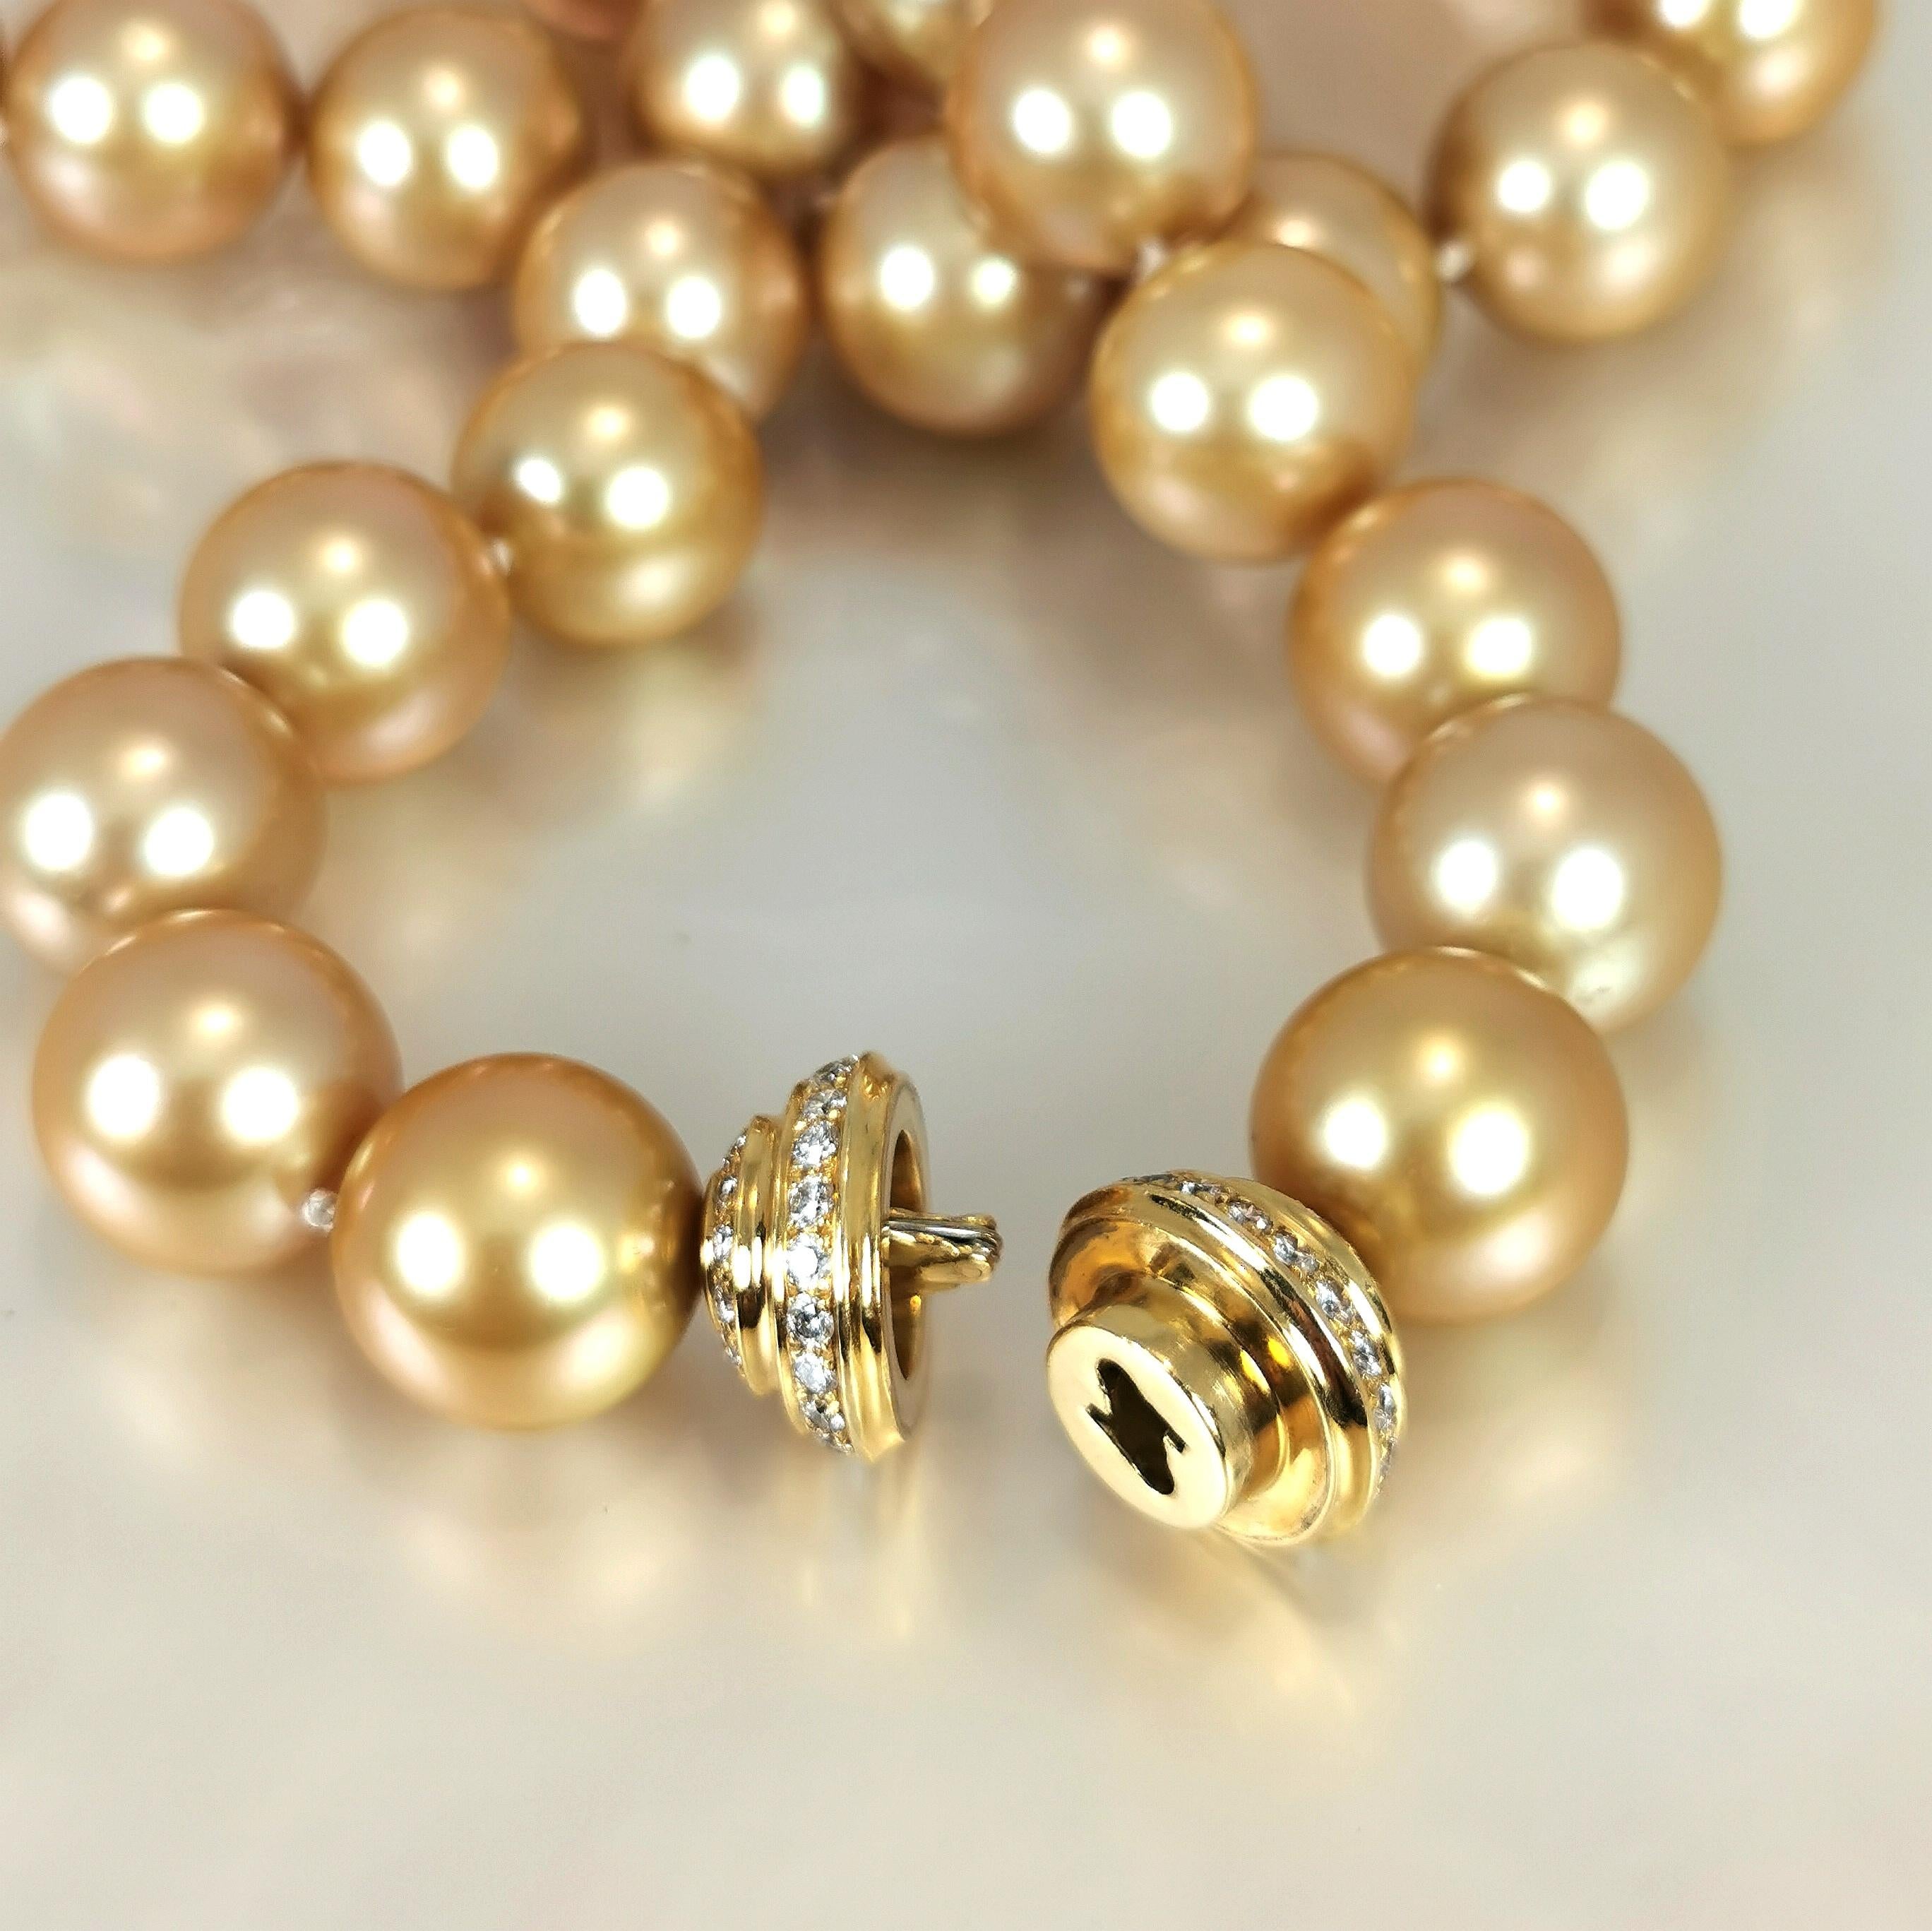 Brilliant Cut Top Gem Golden Southsea Necklace with 18k Gold Diamonds Clasp For Sale